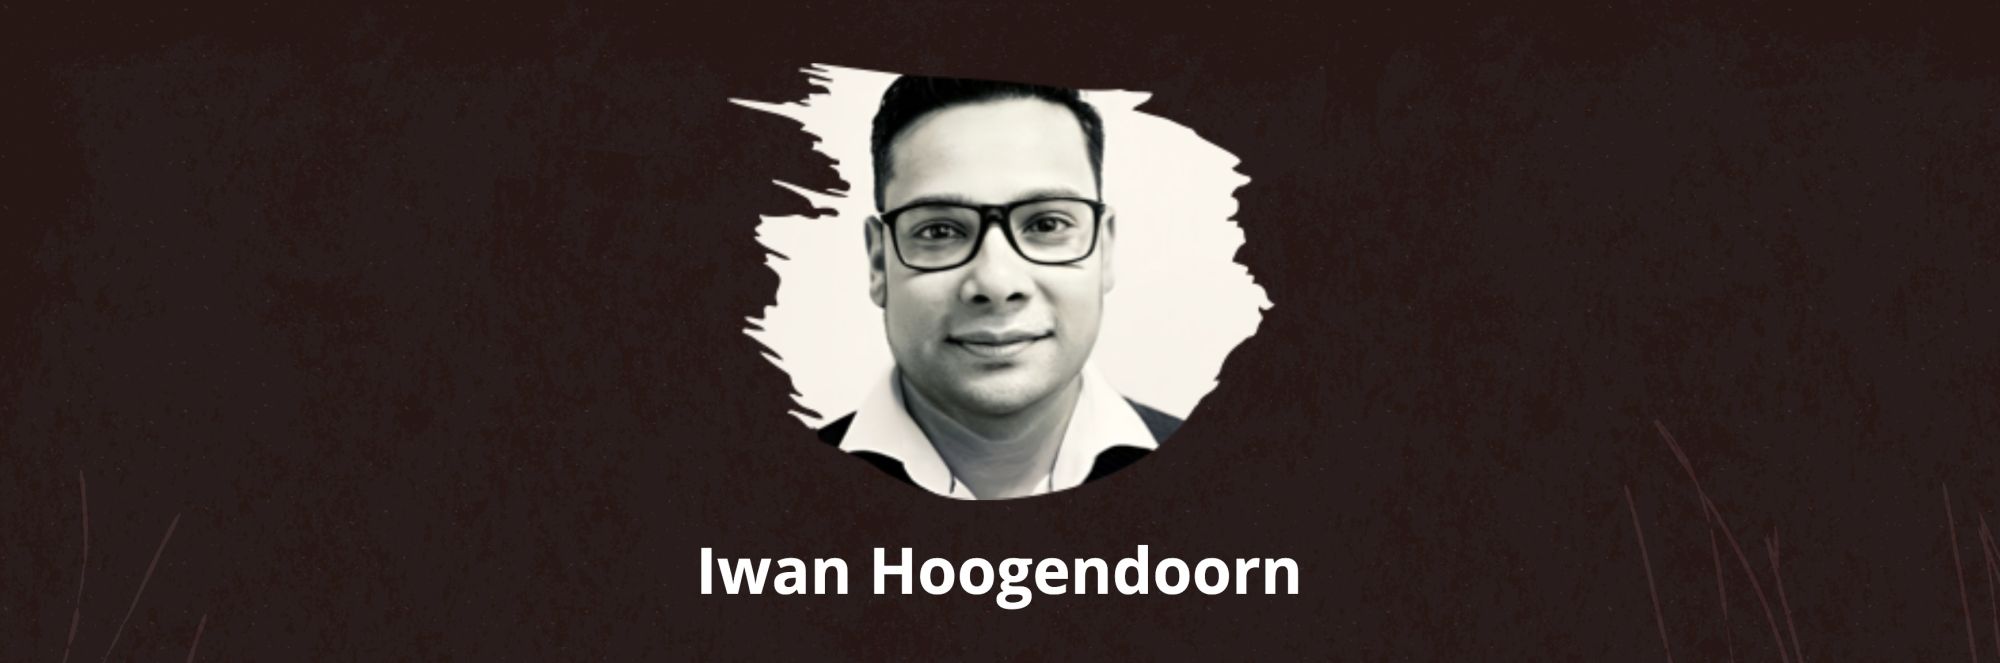 Iwan-hoogendoorn.logo-2.jpg